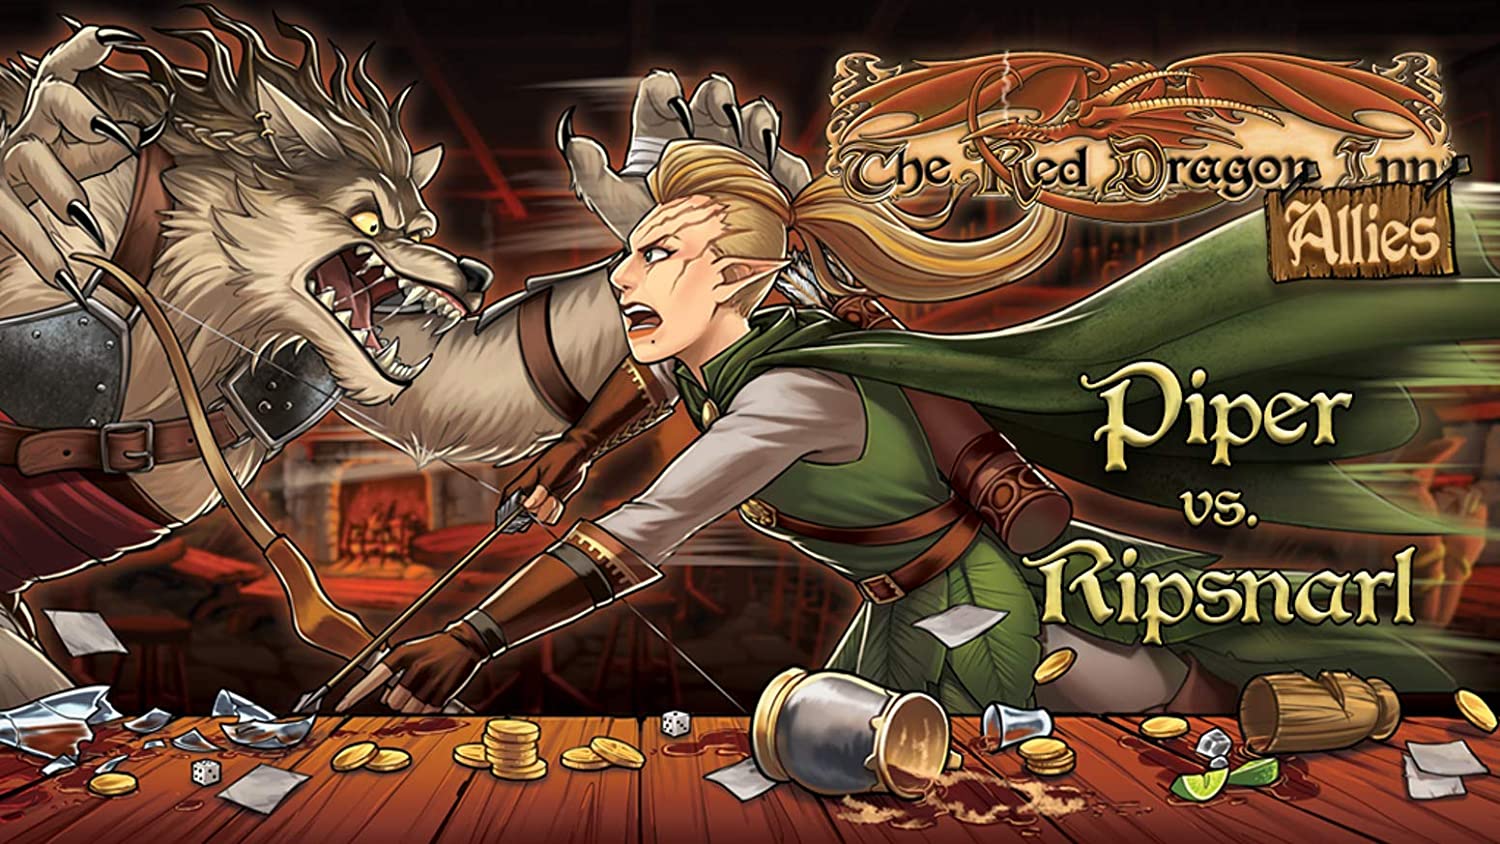 Slug Fest Games Red Dragon Inn: Allies - Piper vs. Ripsnarl